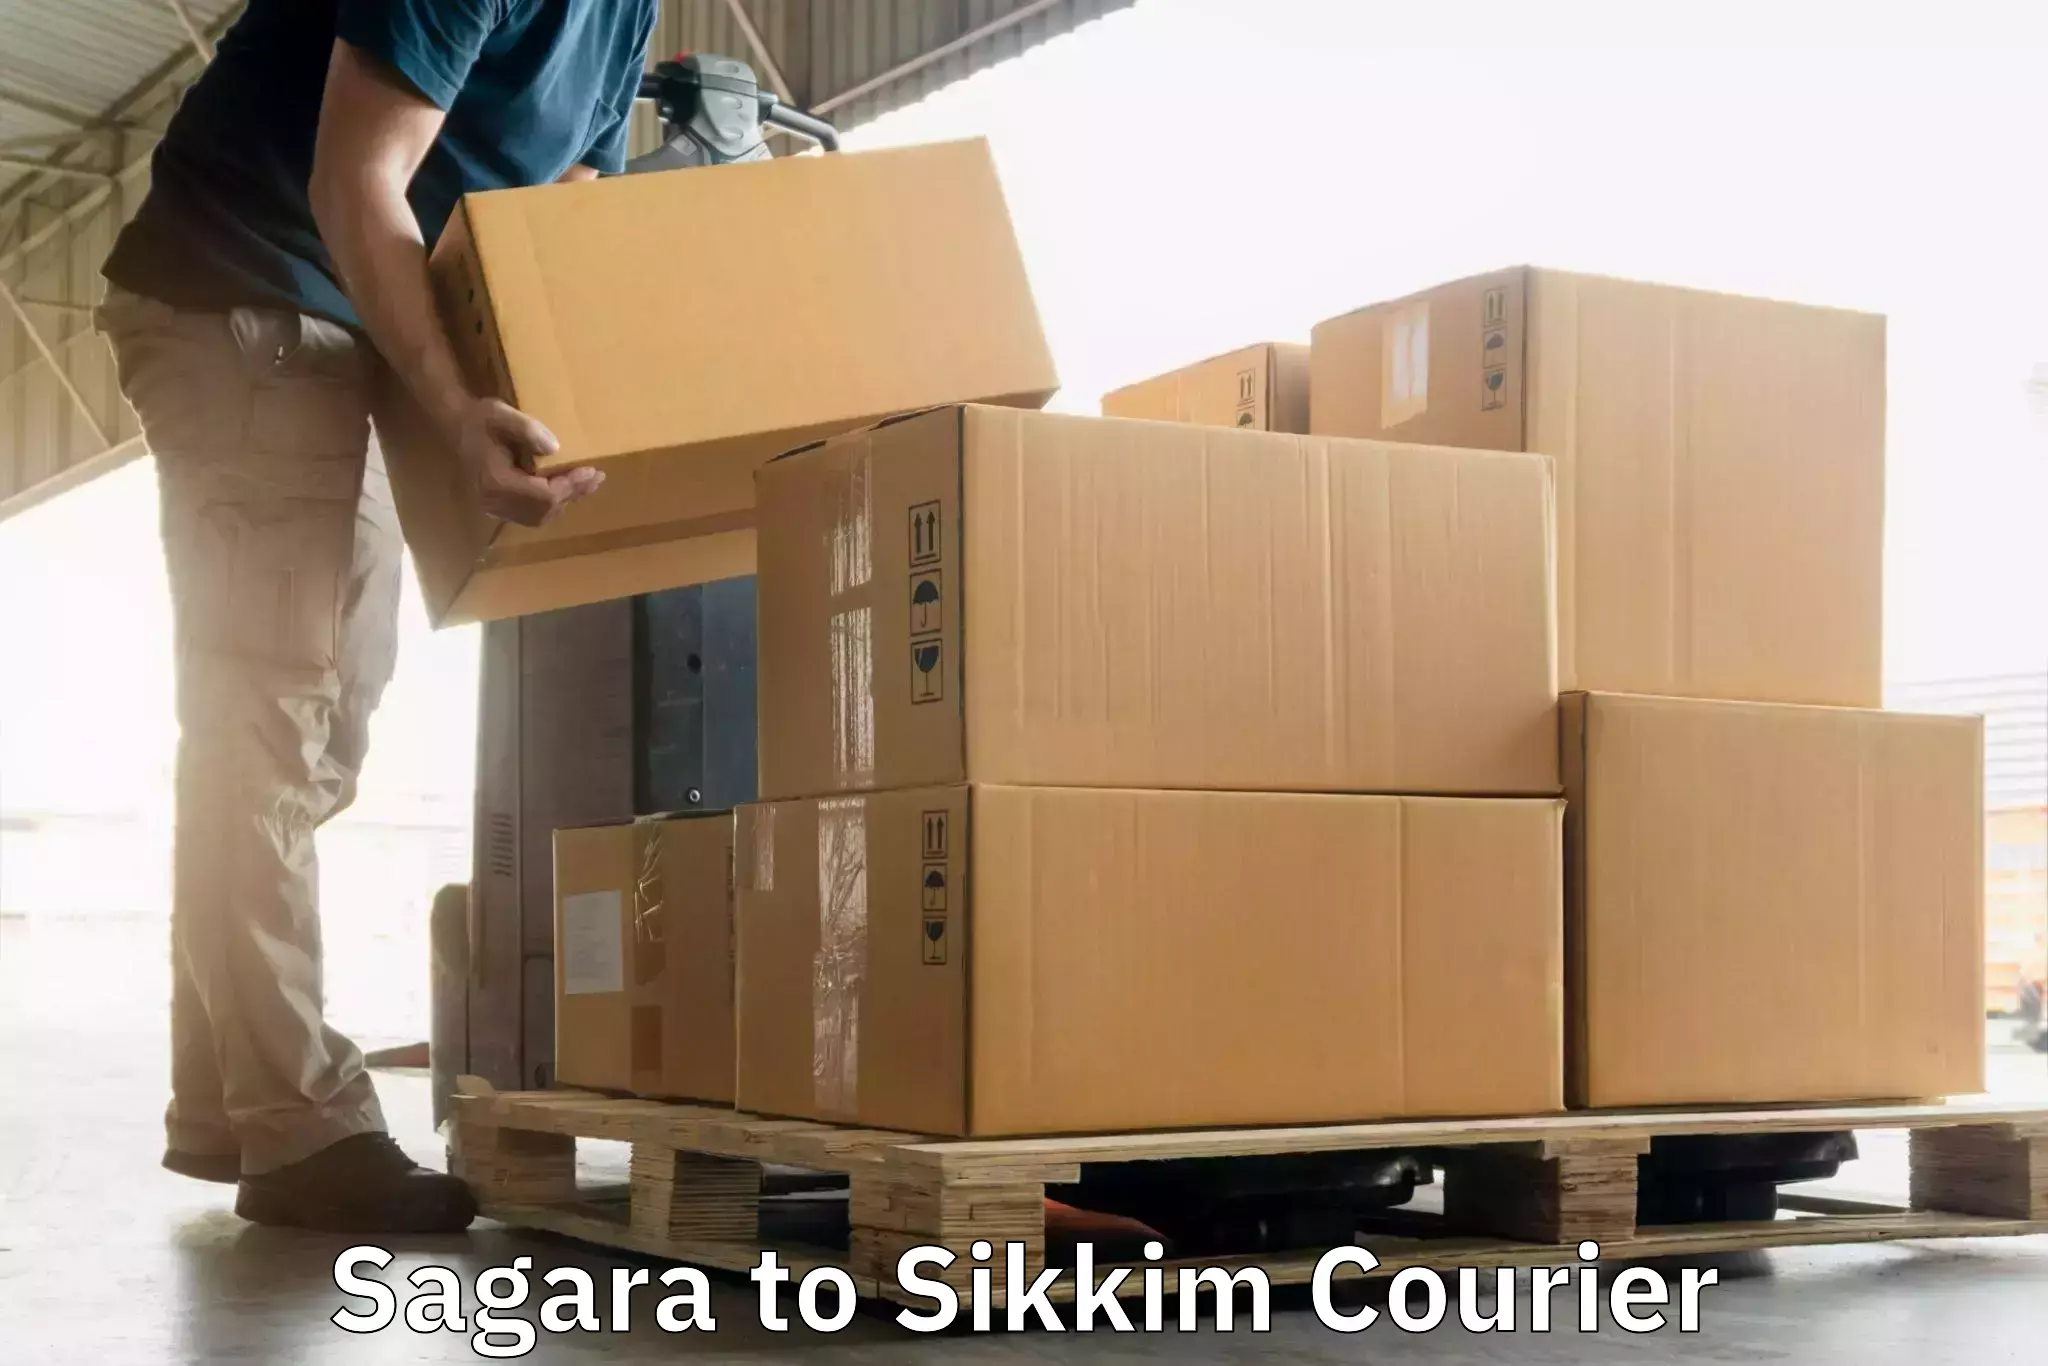 Global logistics network Sagara to Sikkim